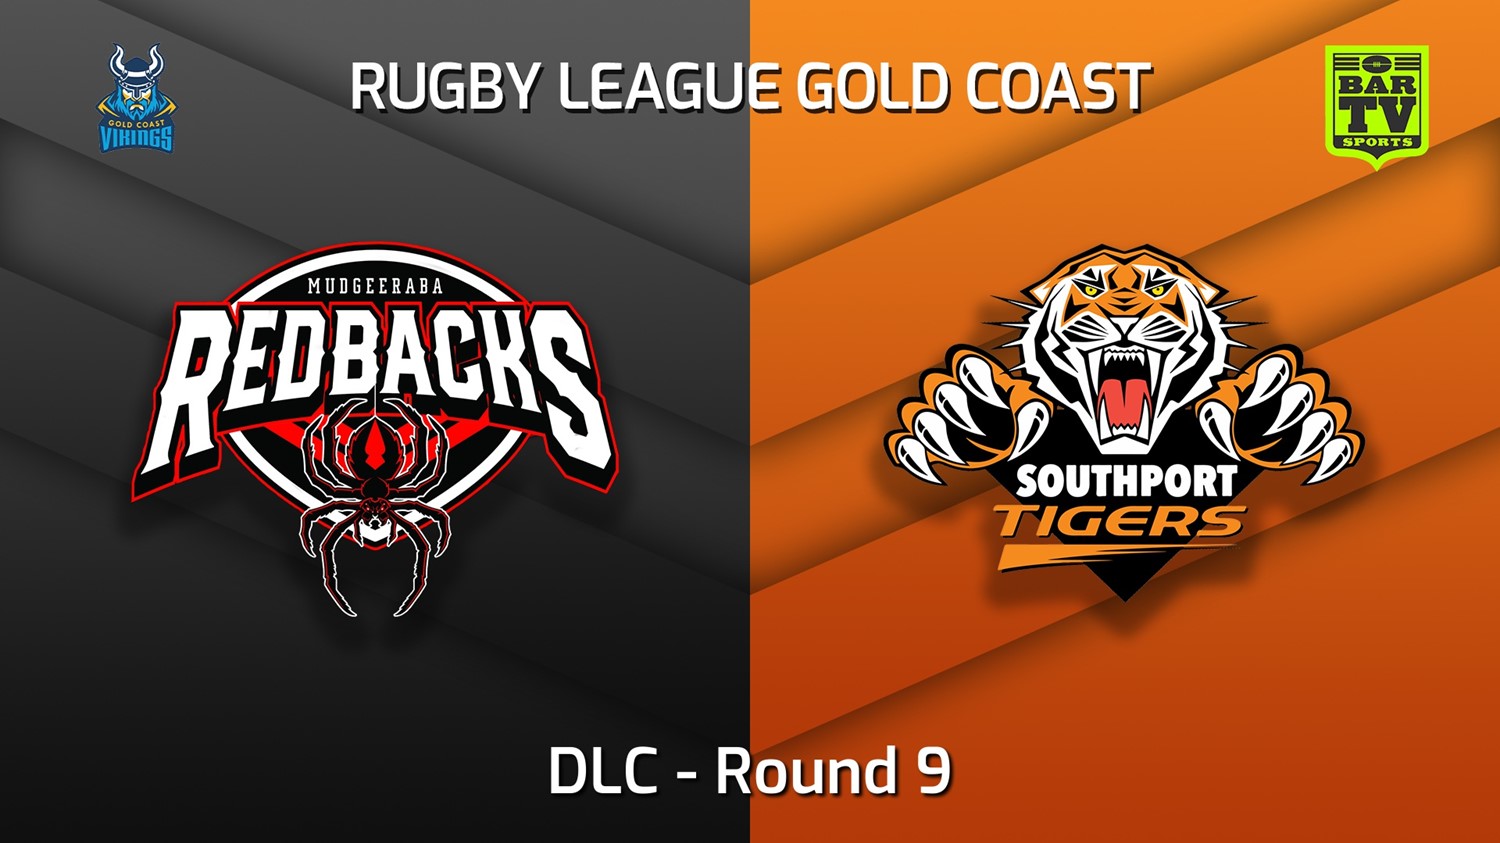 220605-Gold Coast Round 9 - DLC - Mudgeeraba Redbacks v Southport Tigers Slate Image